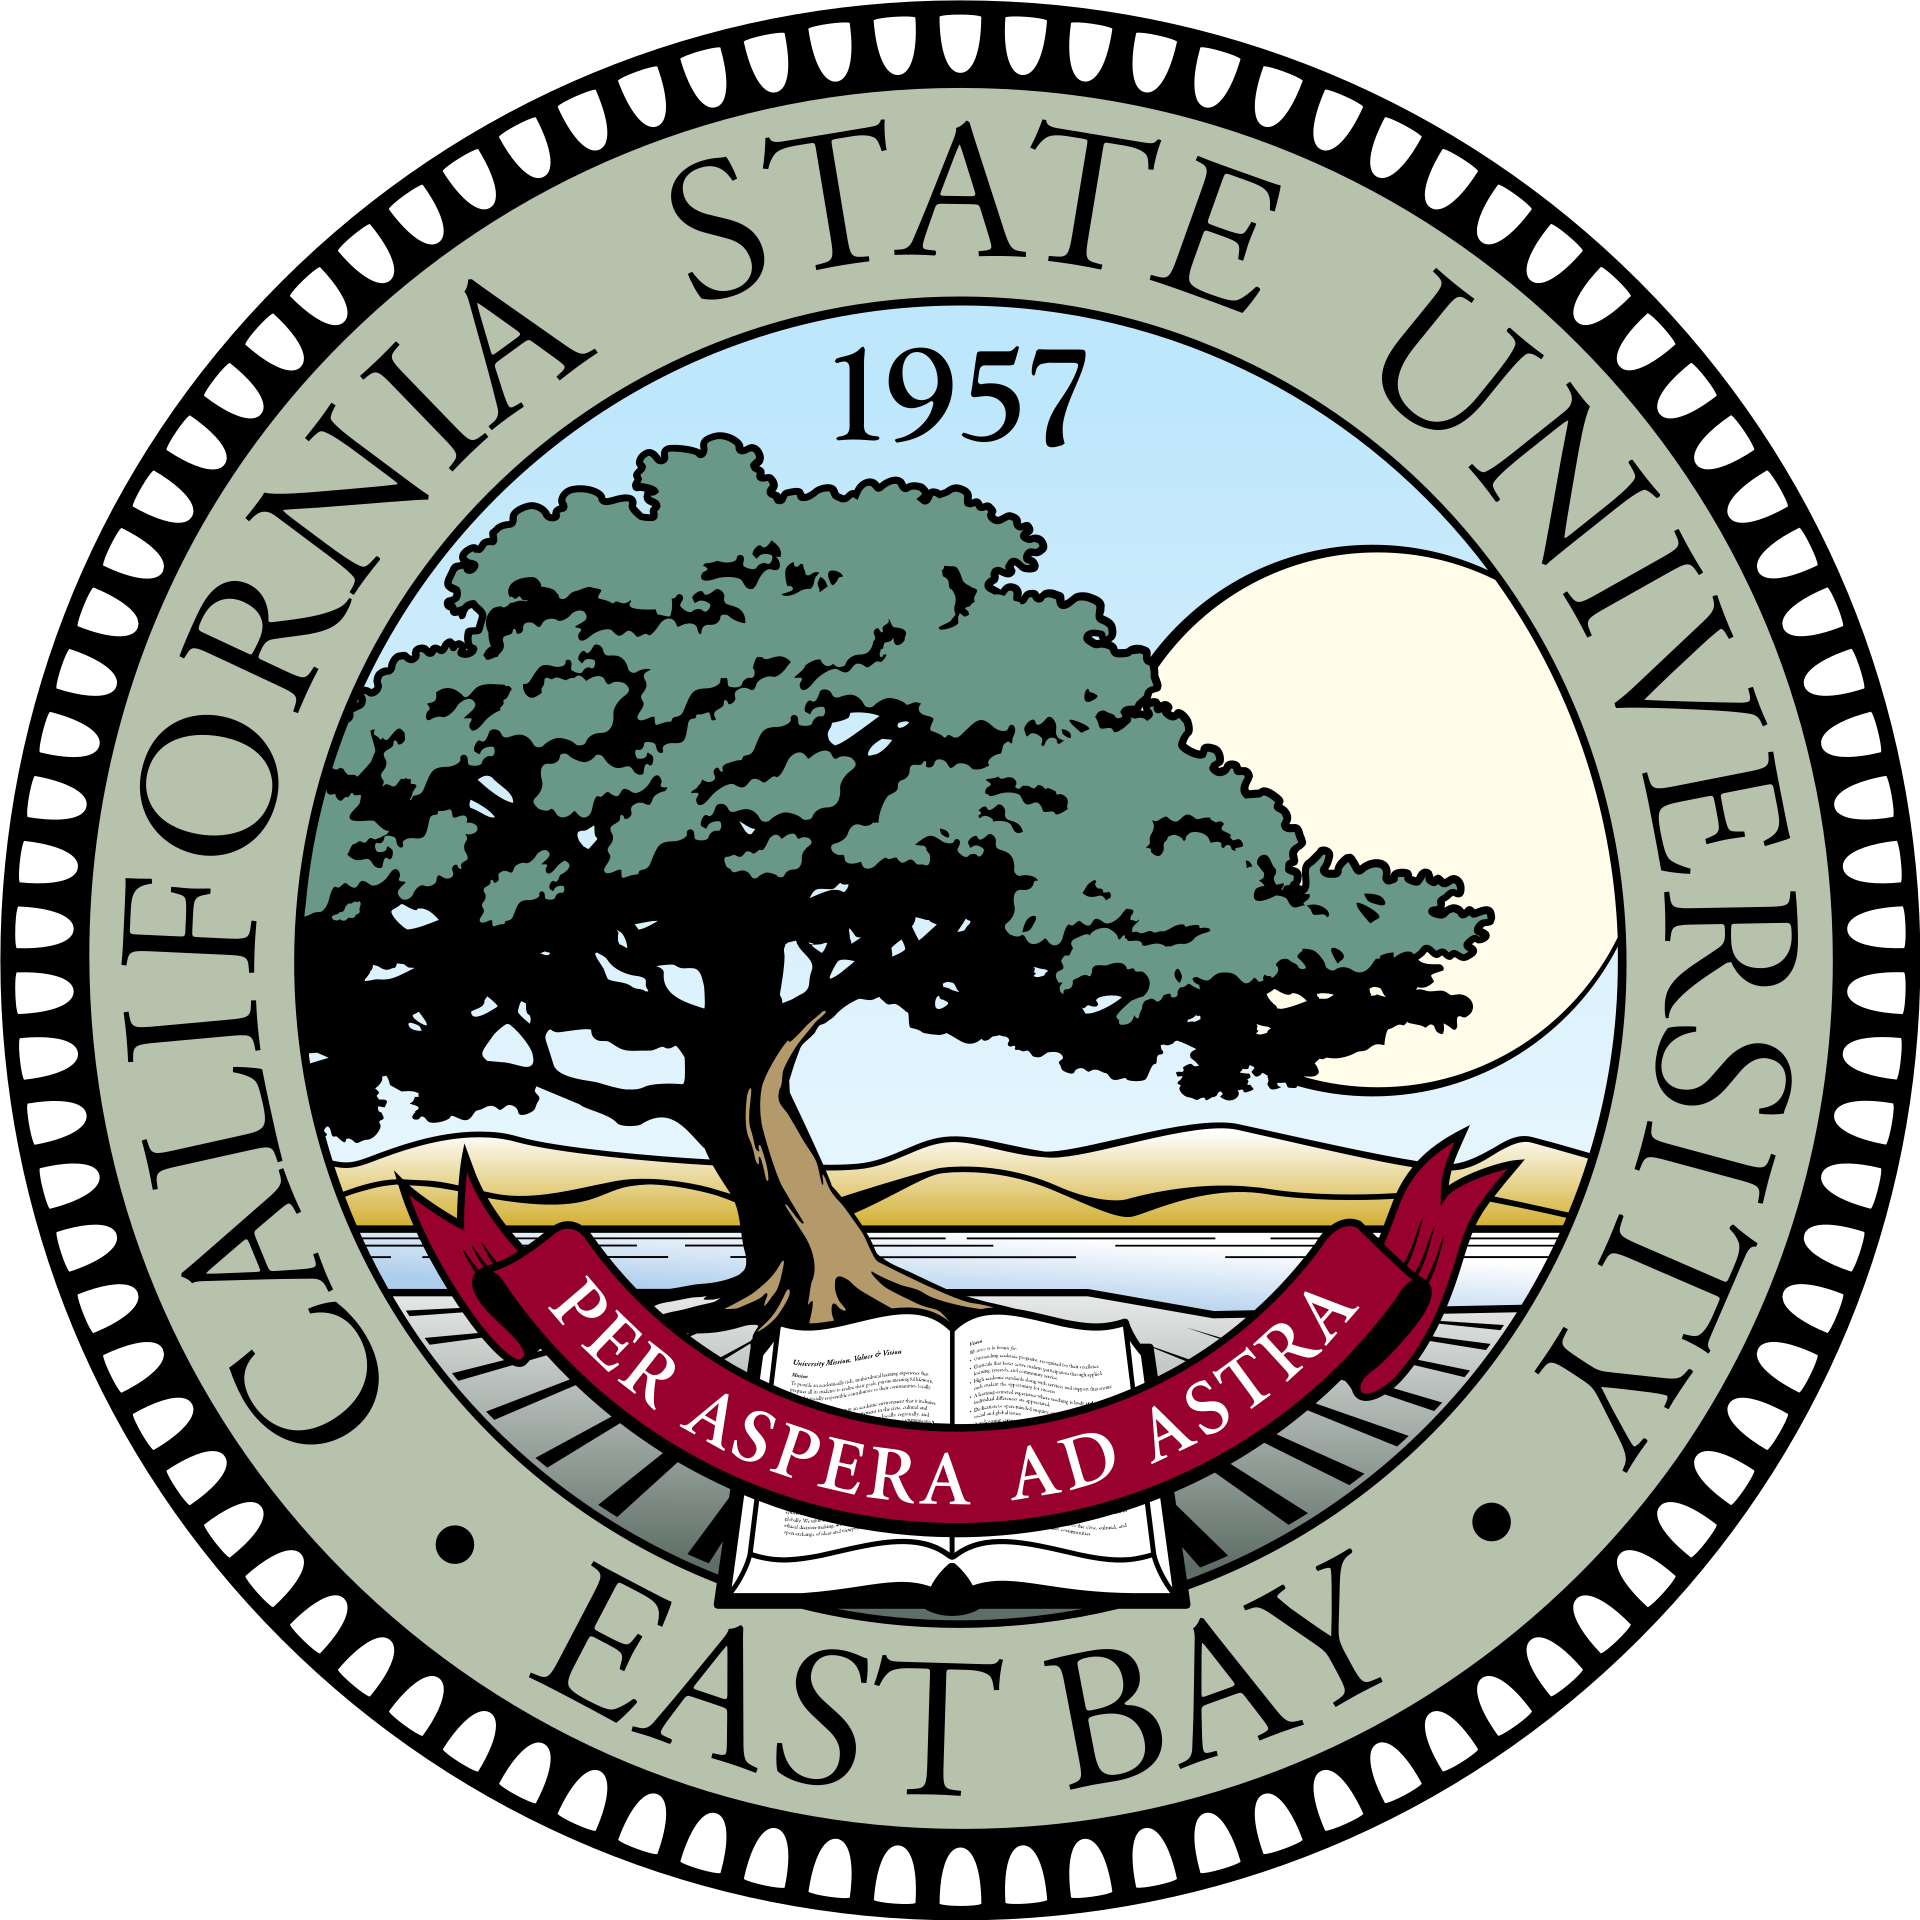 cal state university East Bay Logo